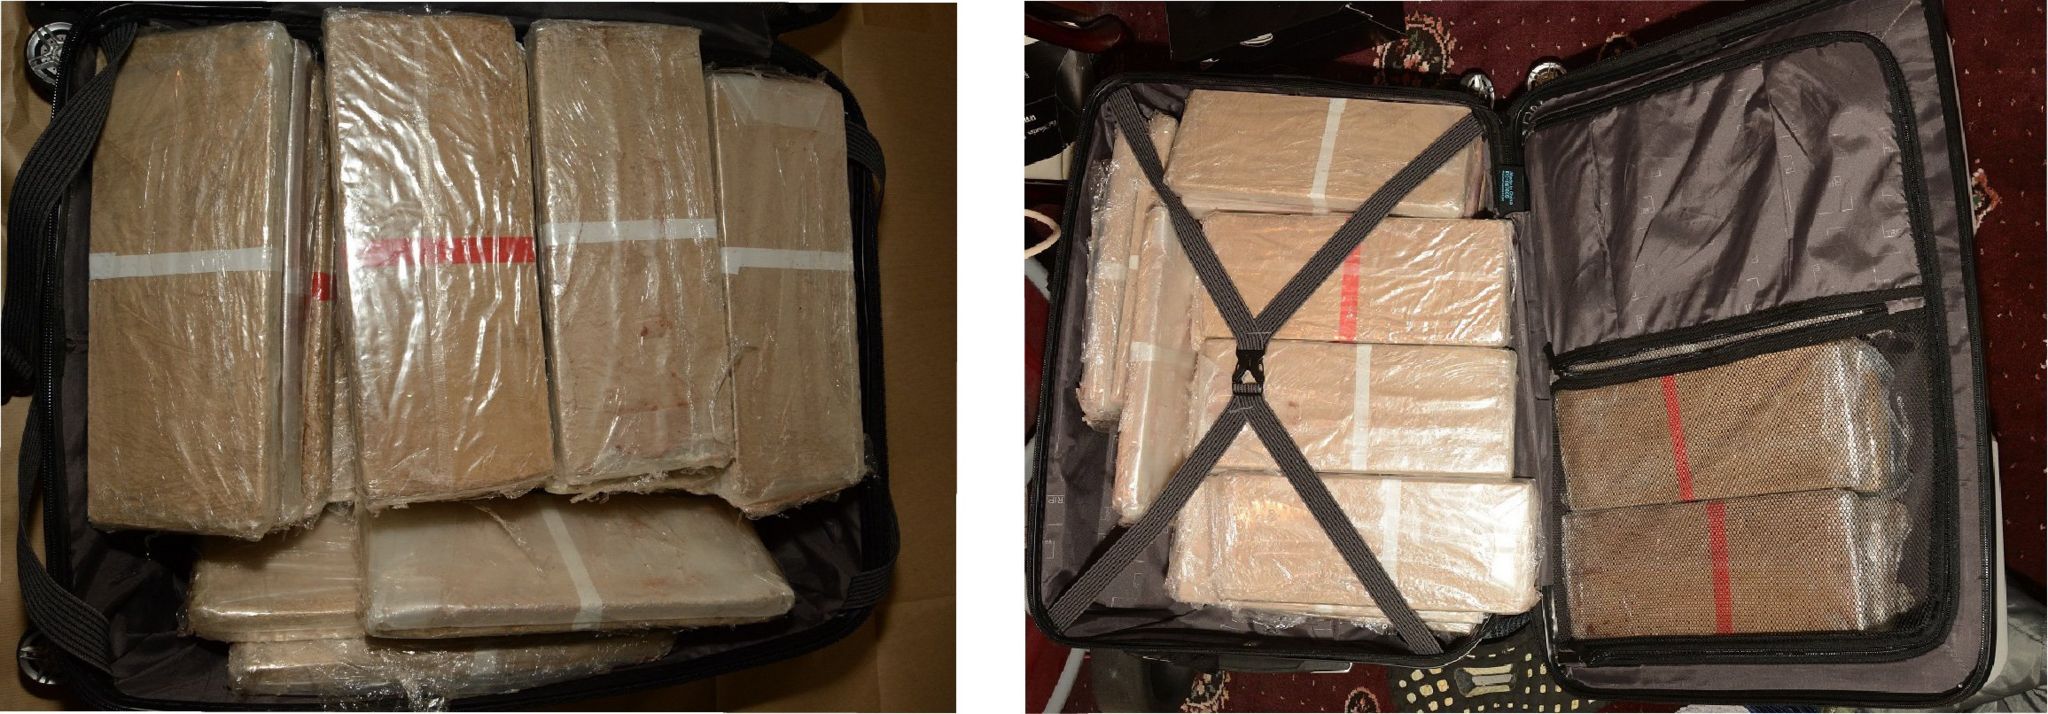 Heroin in suitcases in Bradford